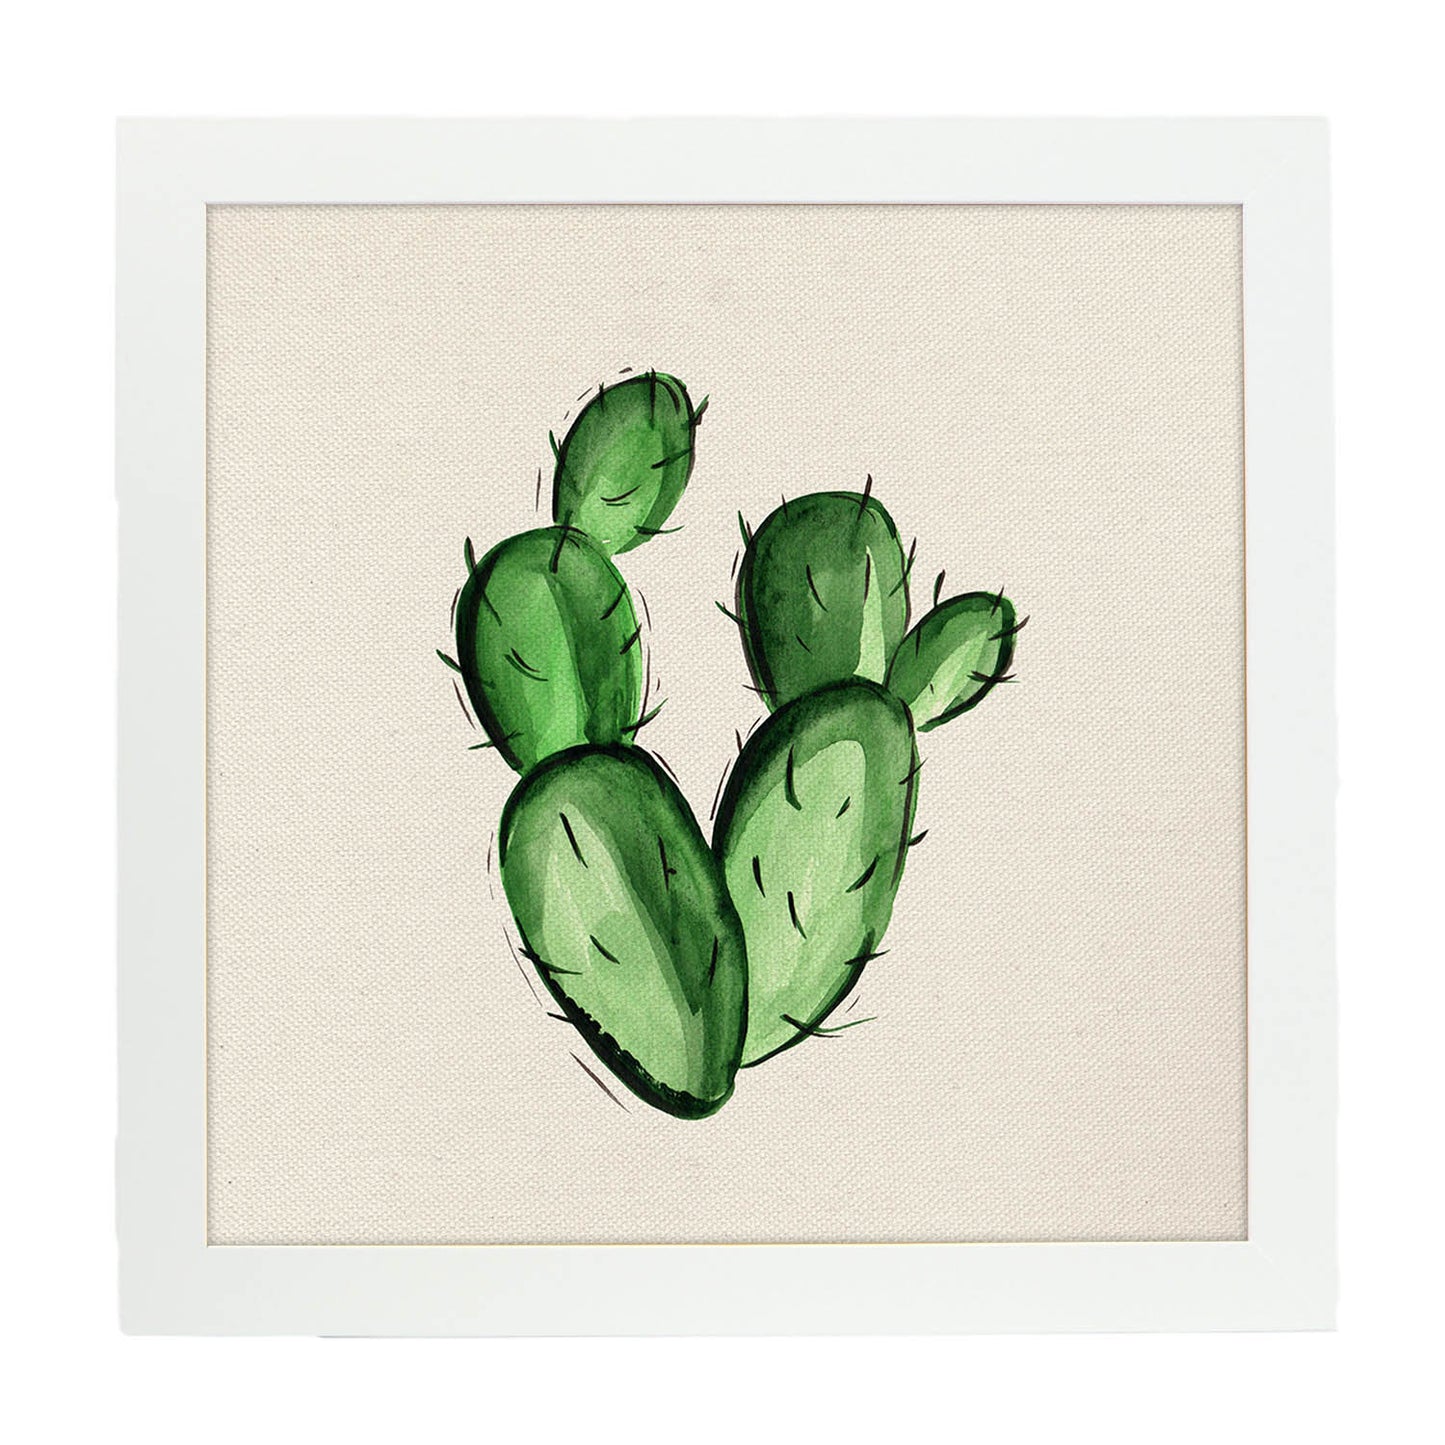 Poster de cactus dibujado. Lámina de Todo pasión-Artwork-Nacnic-25x25 cm-Marco Blanco-Nacnic Estudio SL